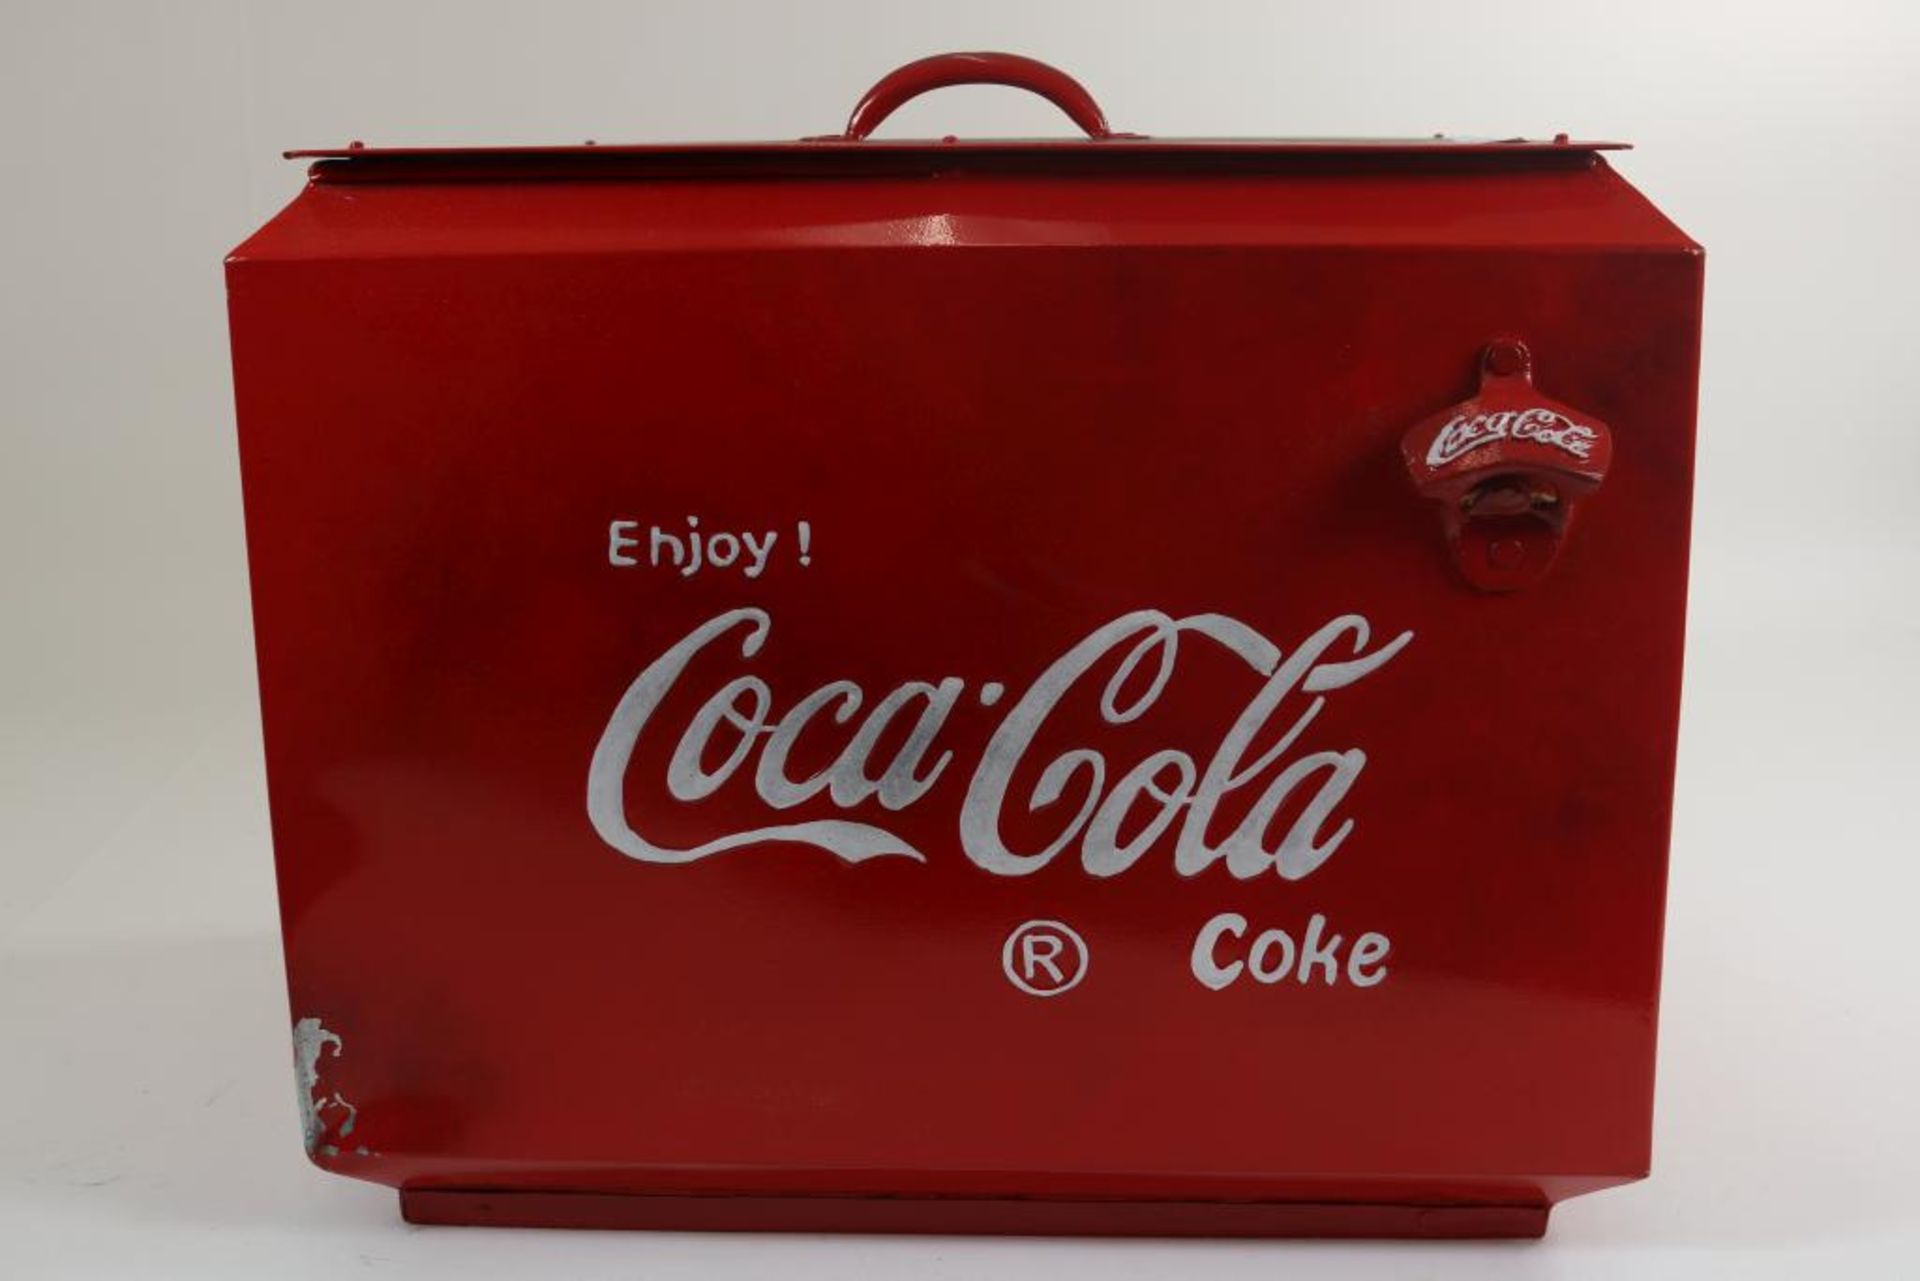 Coca Cola koelbox. 46 x 36 cm.